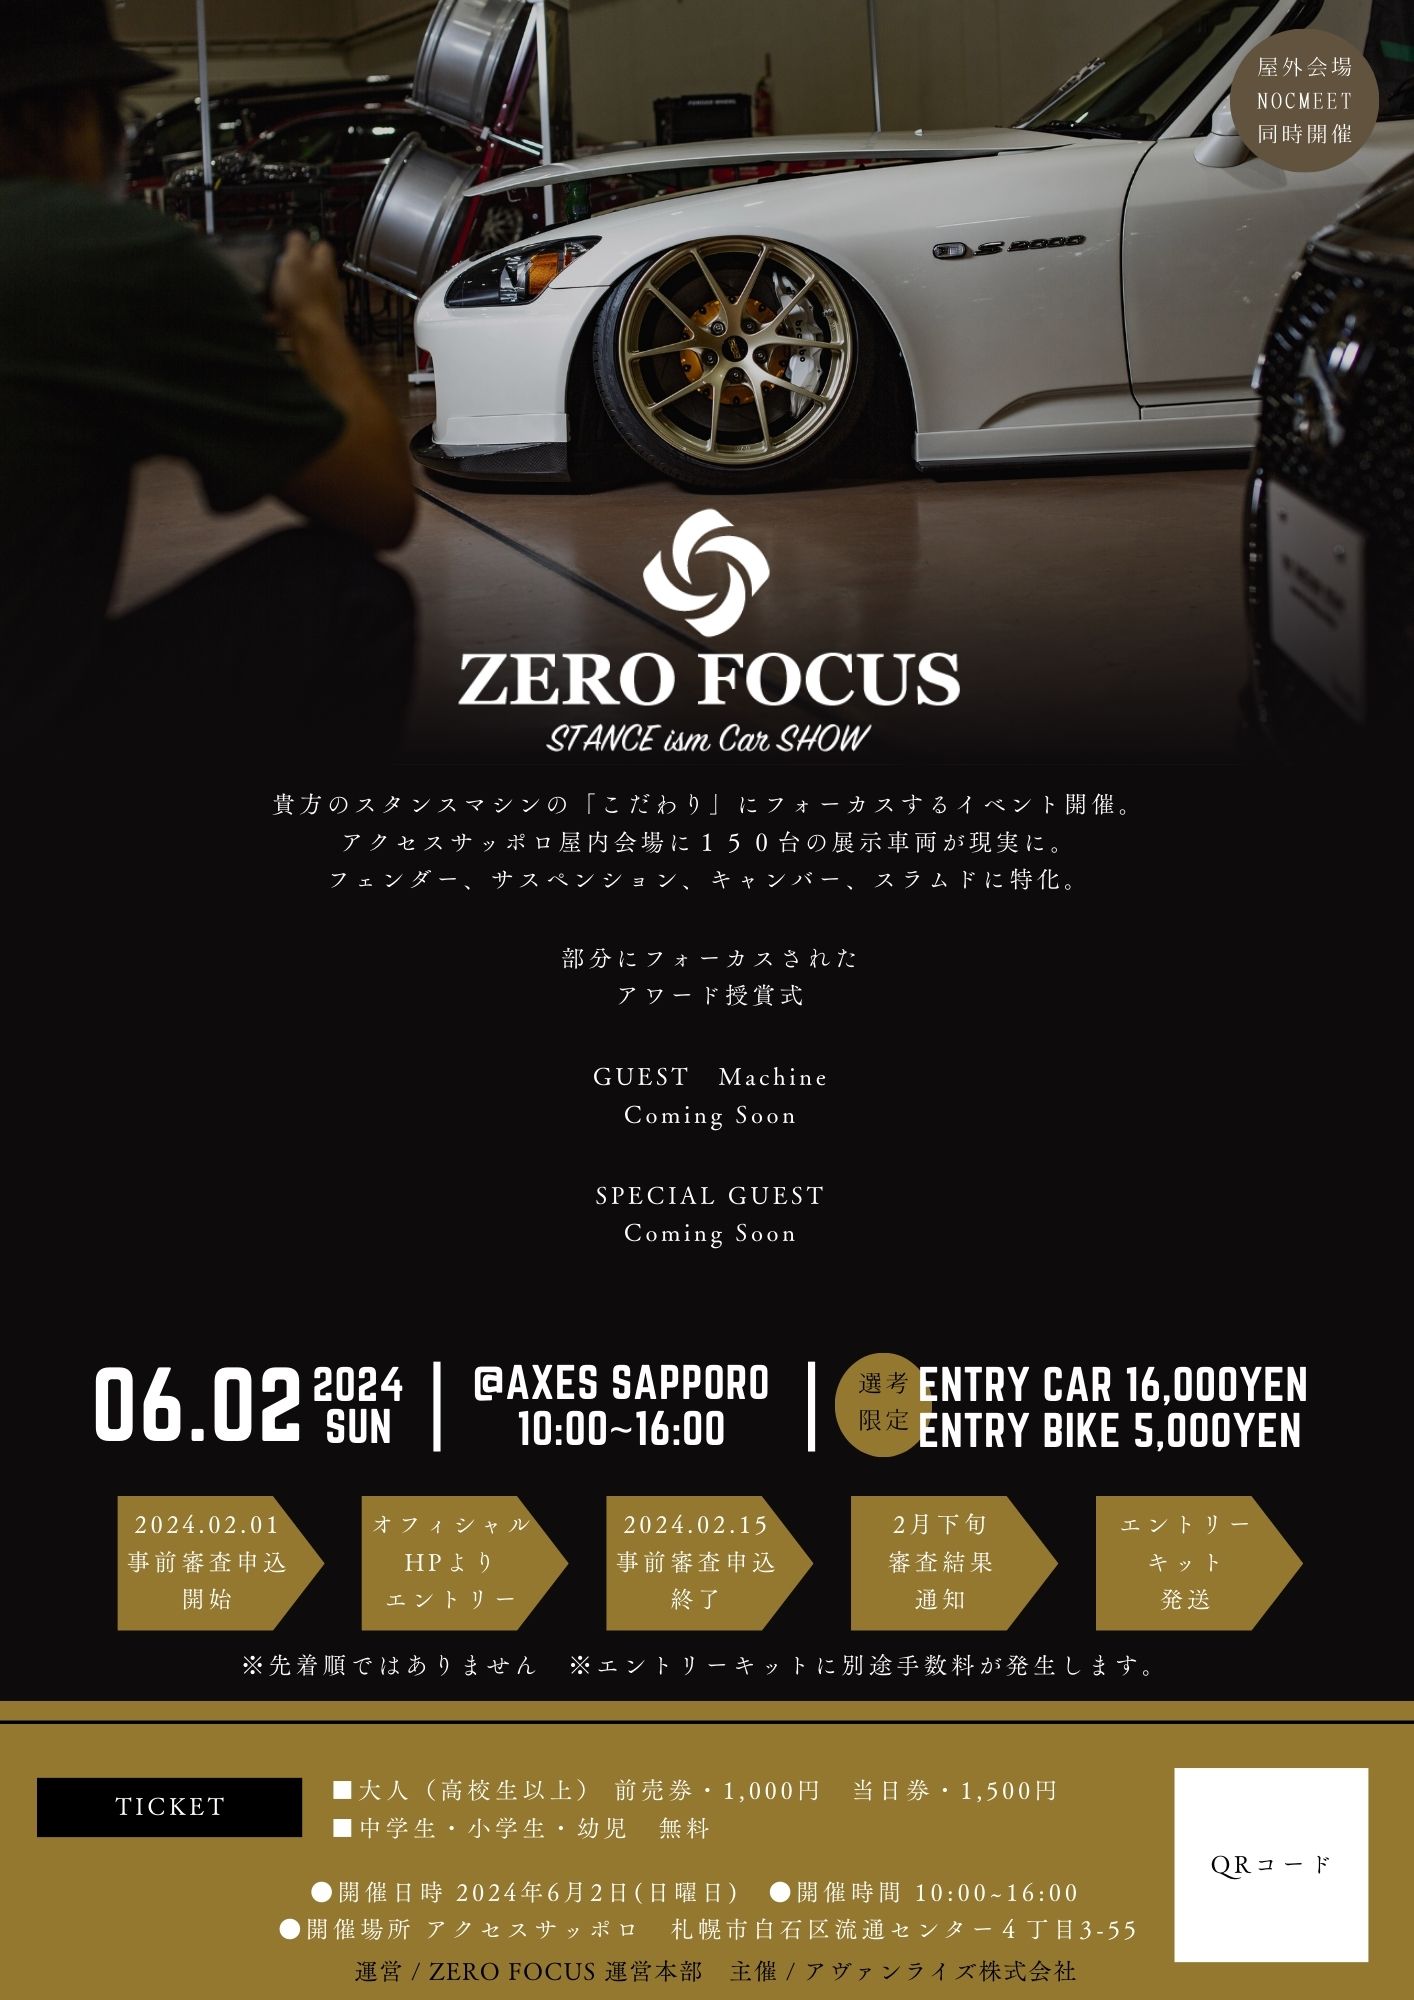 ZERO FOCUS STANCE ism Car SHOW